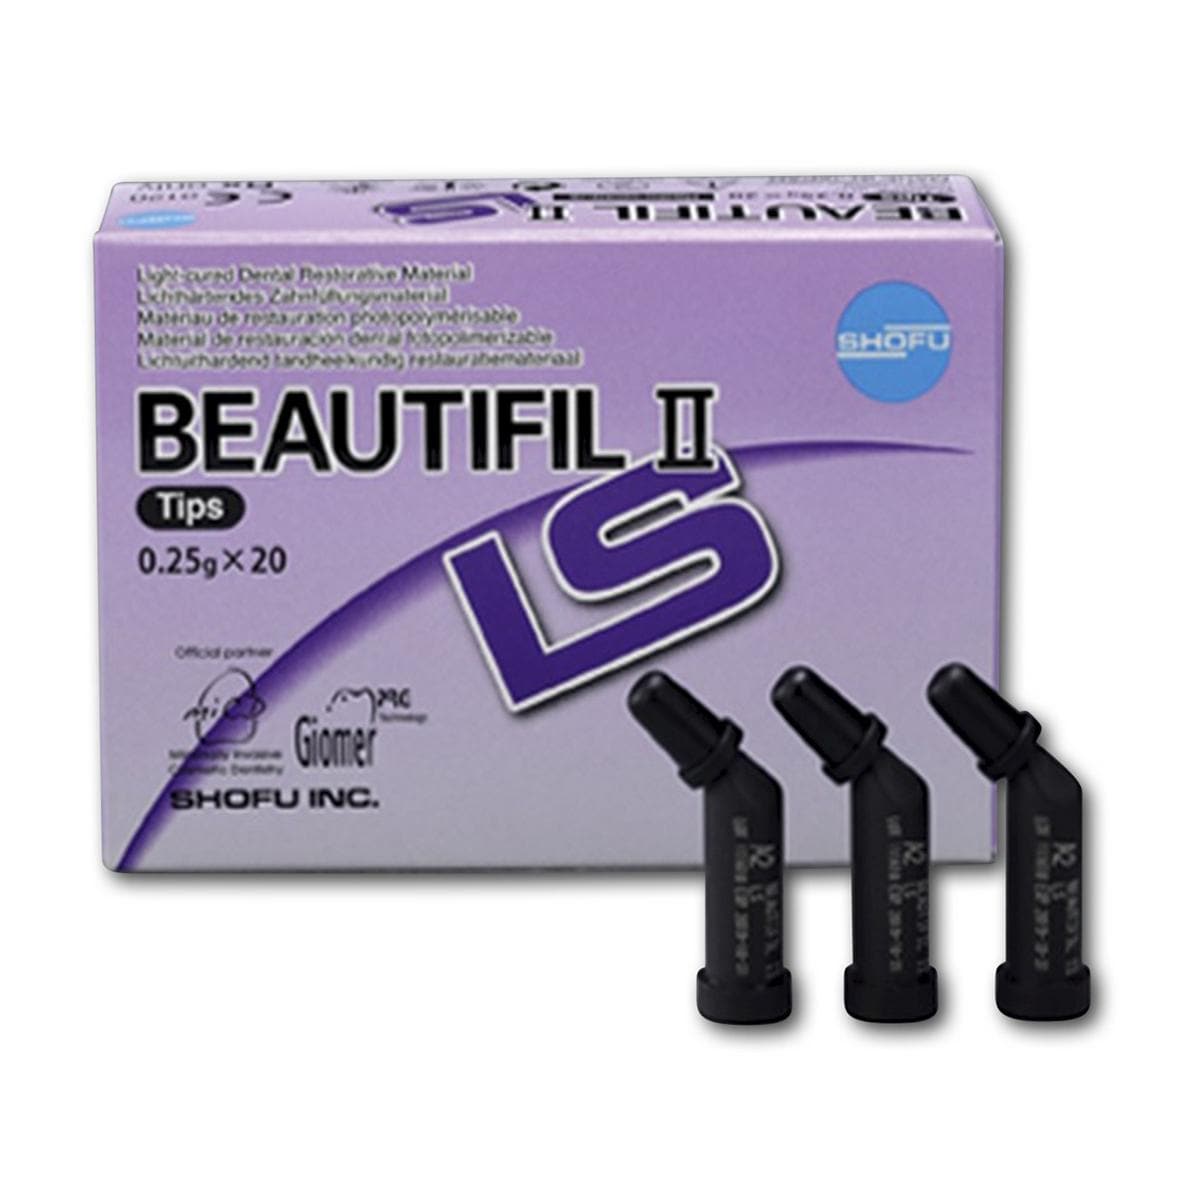 Beautifil II LS, Tips - A1, Tips 20 x 0,25 g